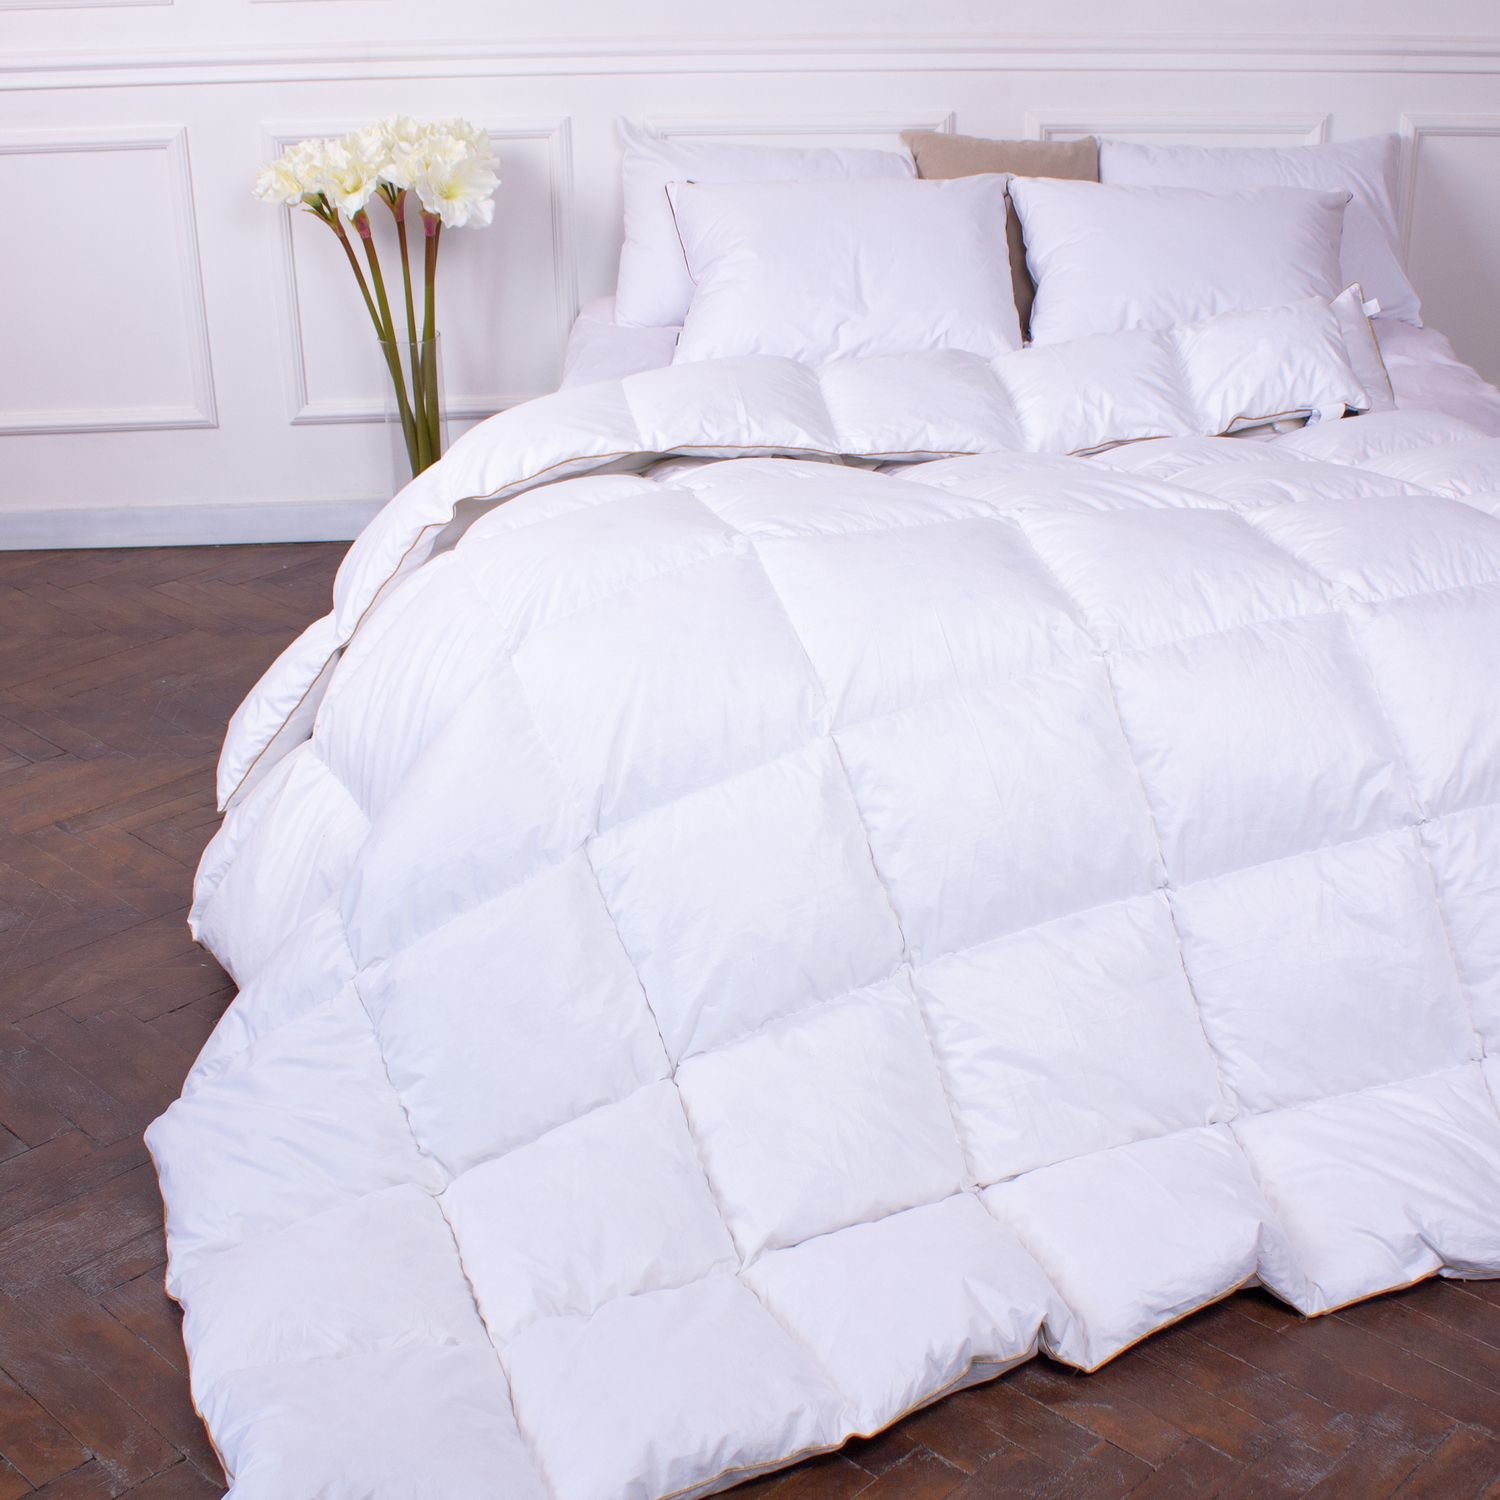 Одеяло пуховое MirSon Raffaello 061, евростандарт, 220x200, белое (2200000075031) - фото 1